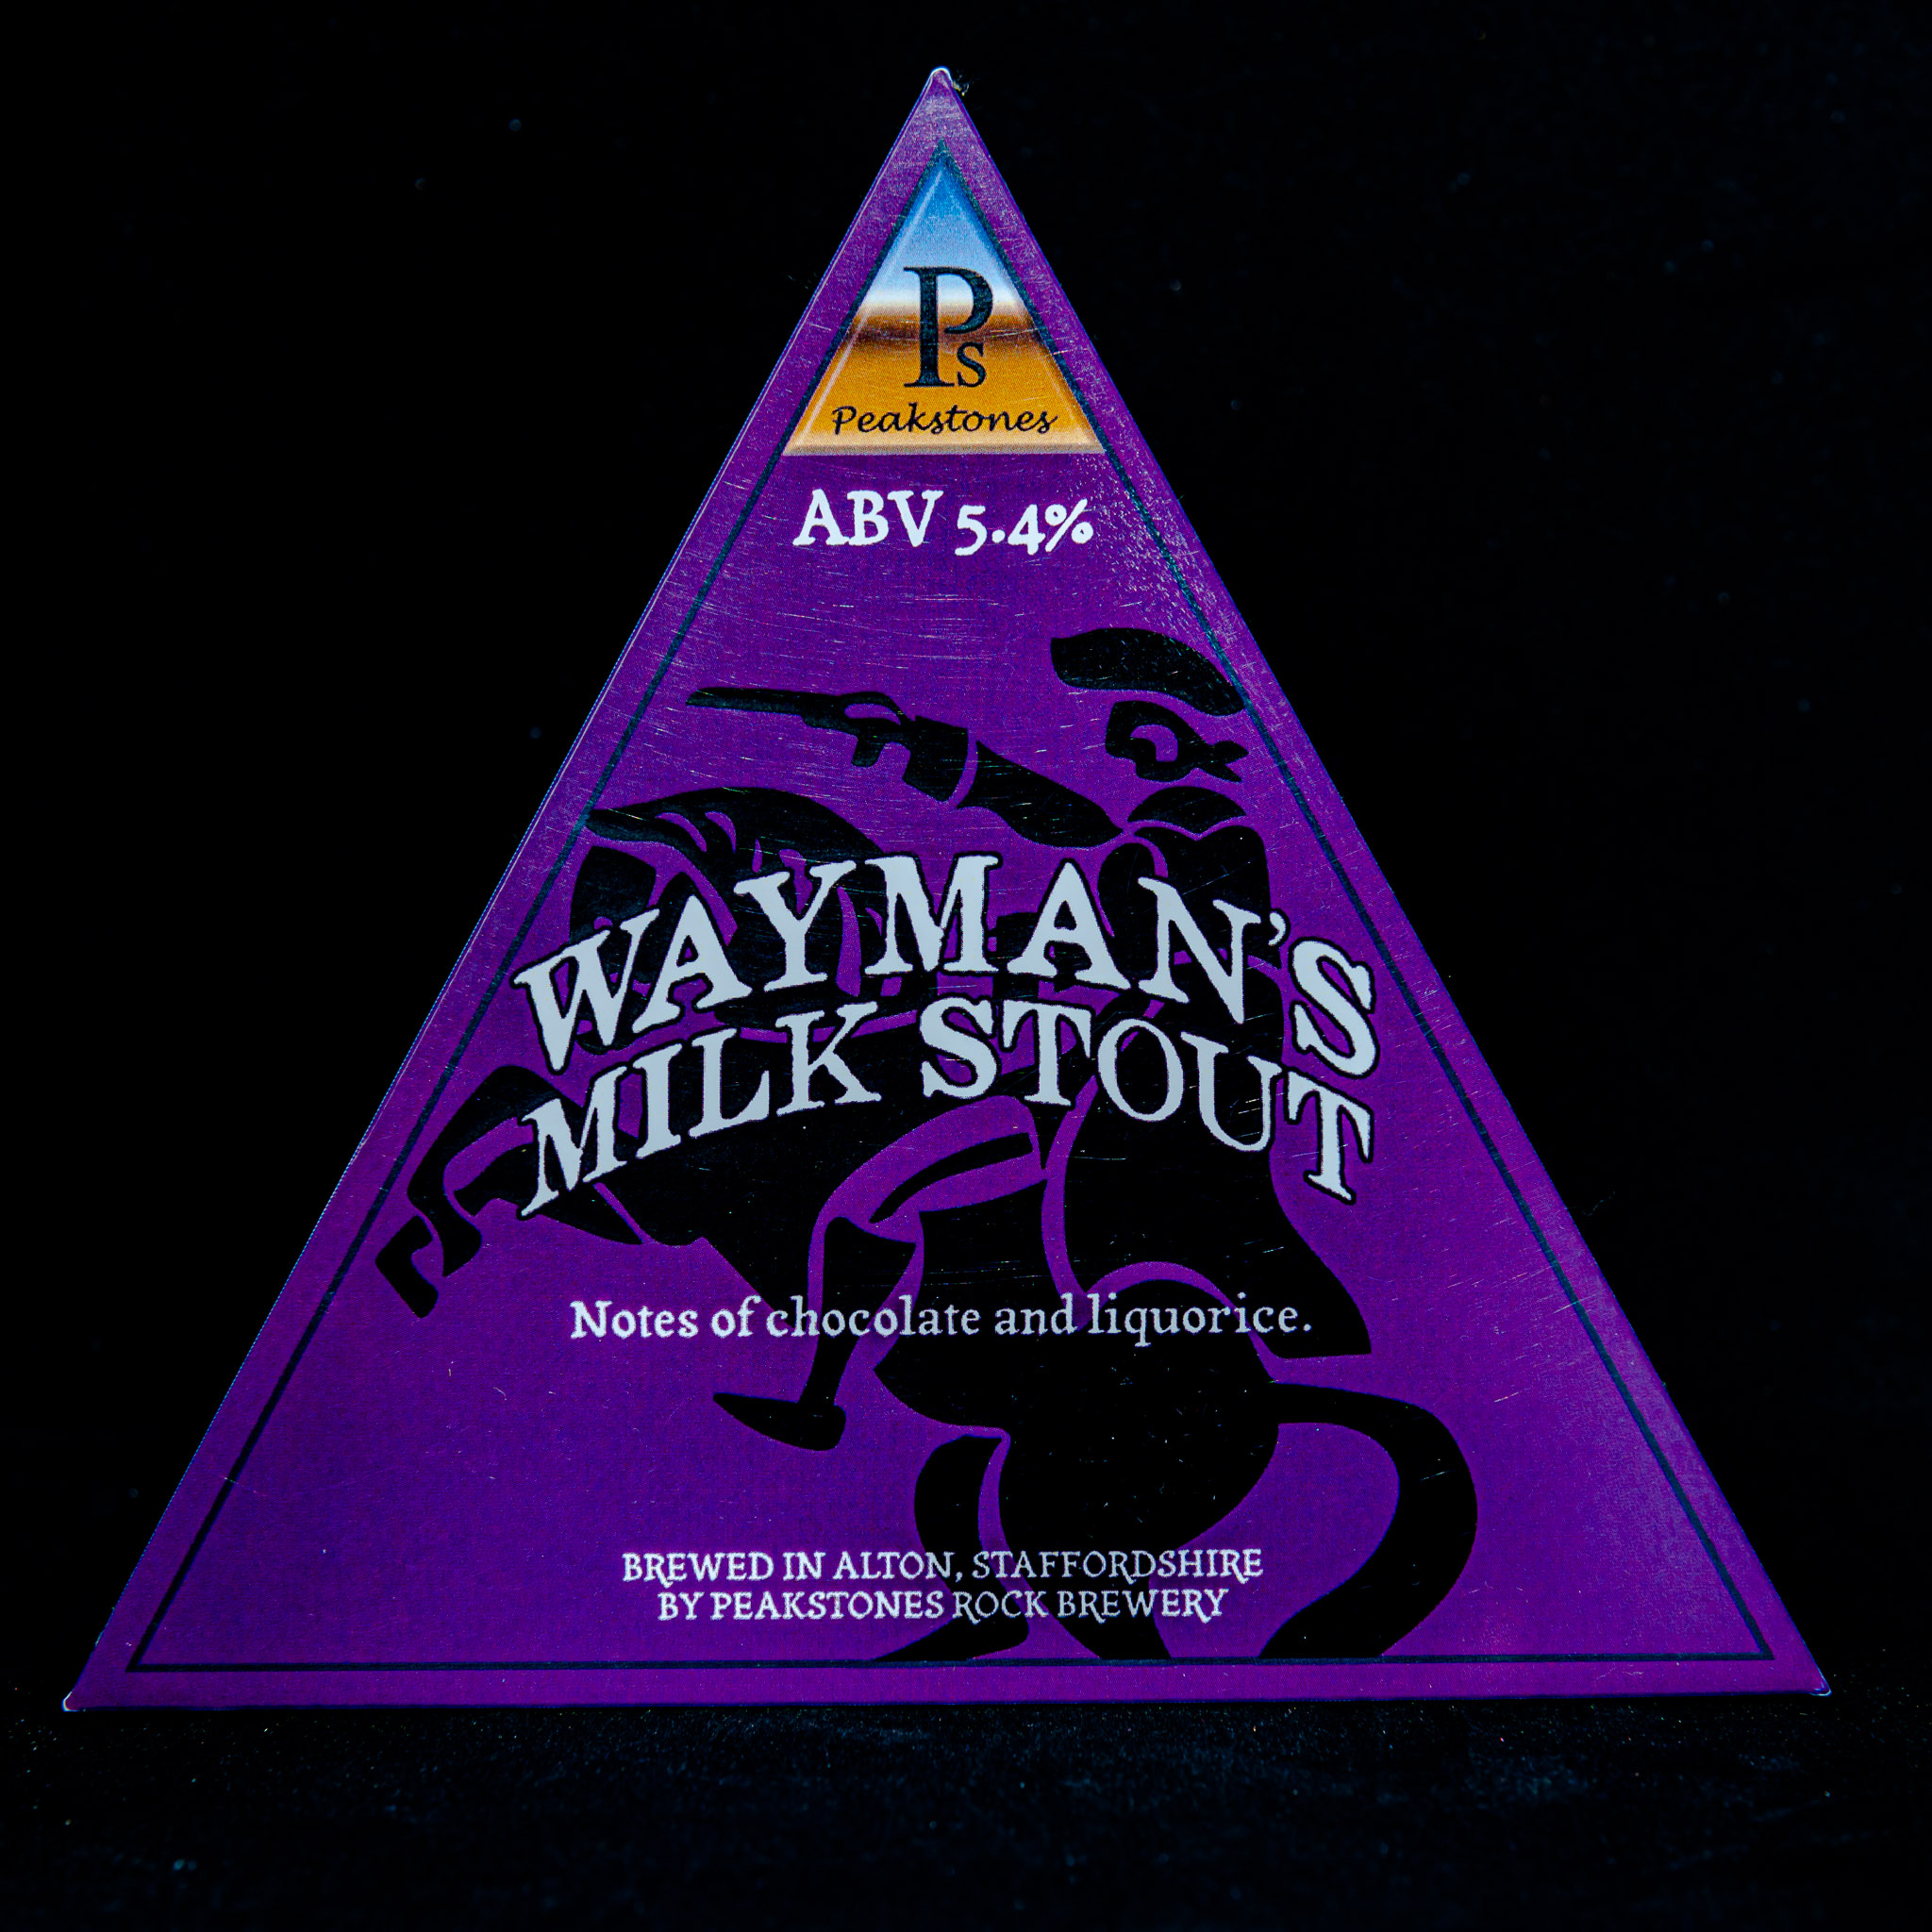 Waymans milk stout